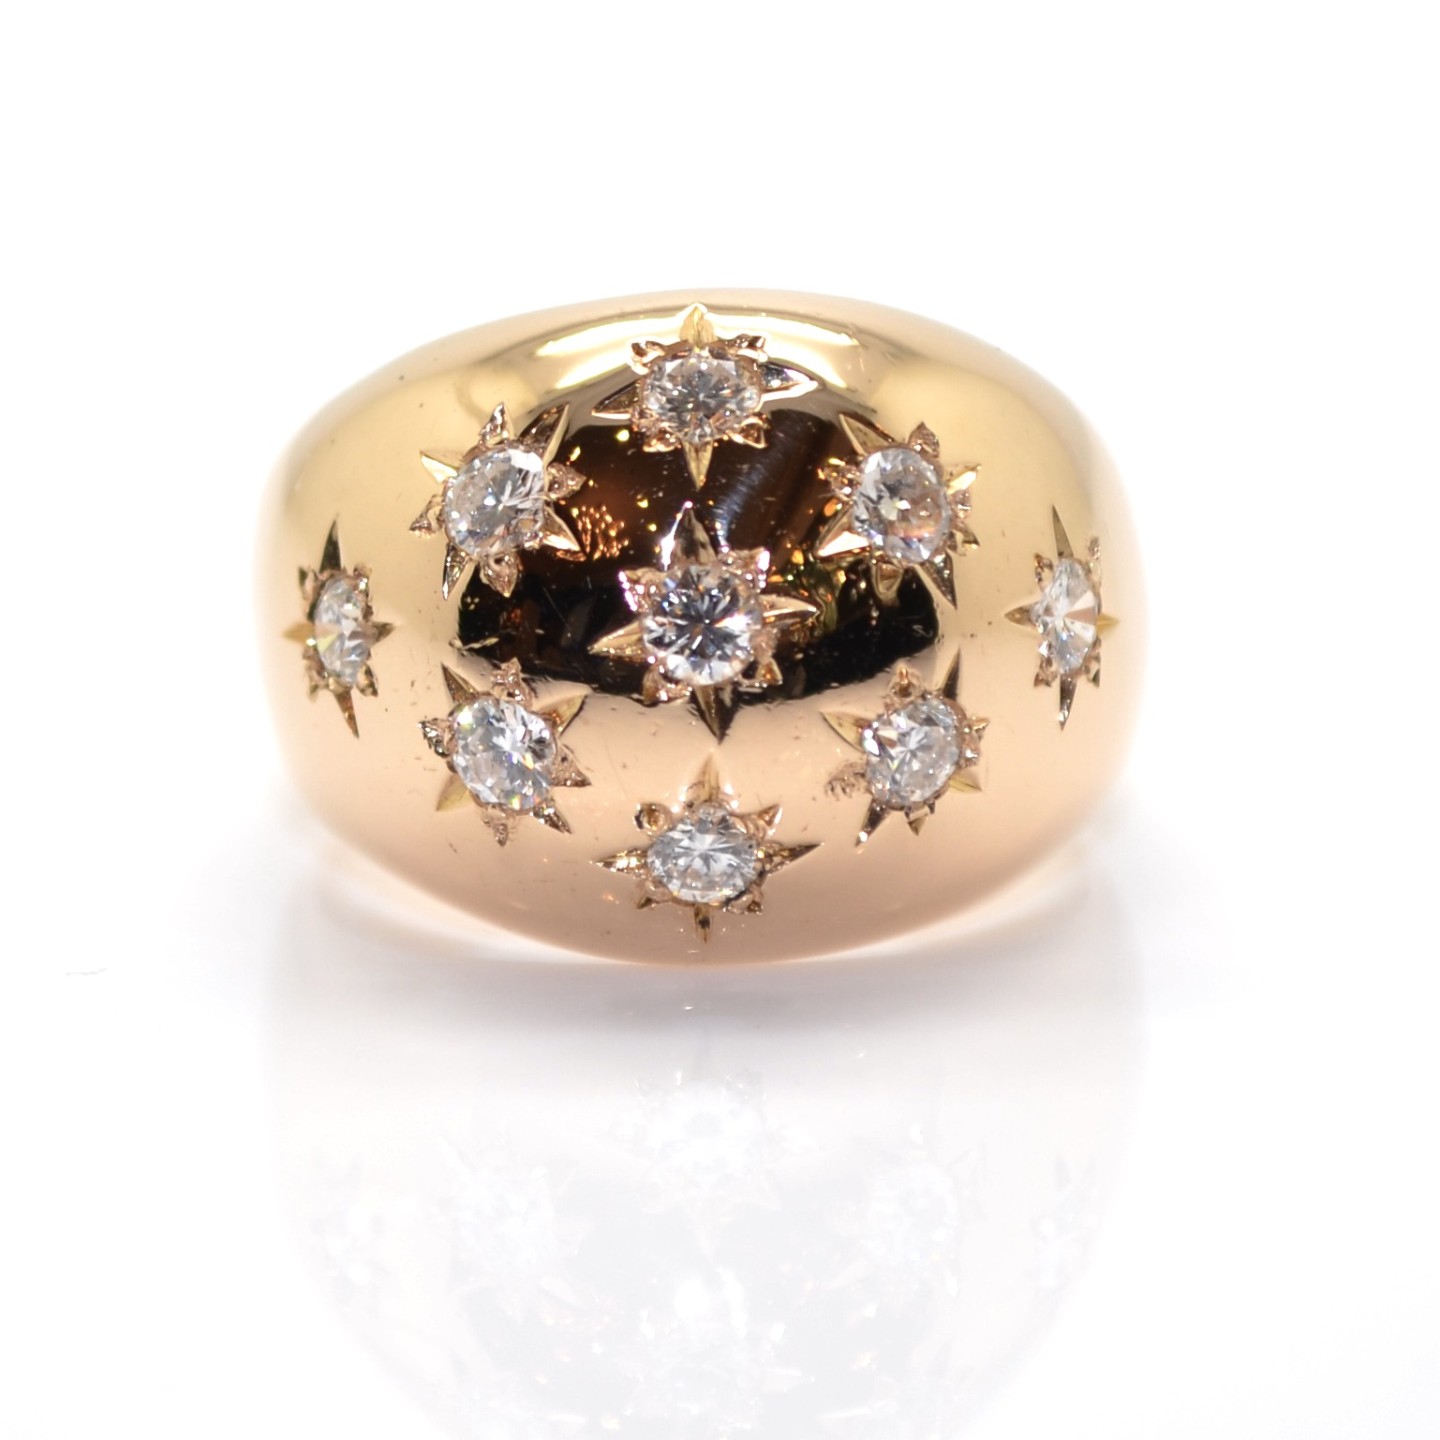 Vintage Bombe Diamond Ring : Antique rings, Antique jewelry